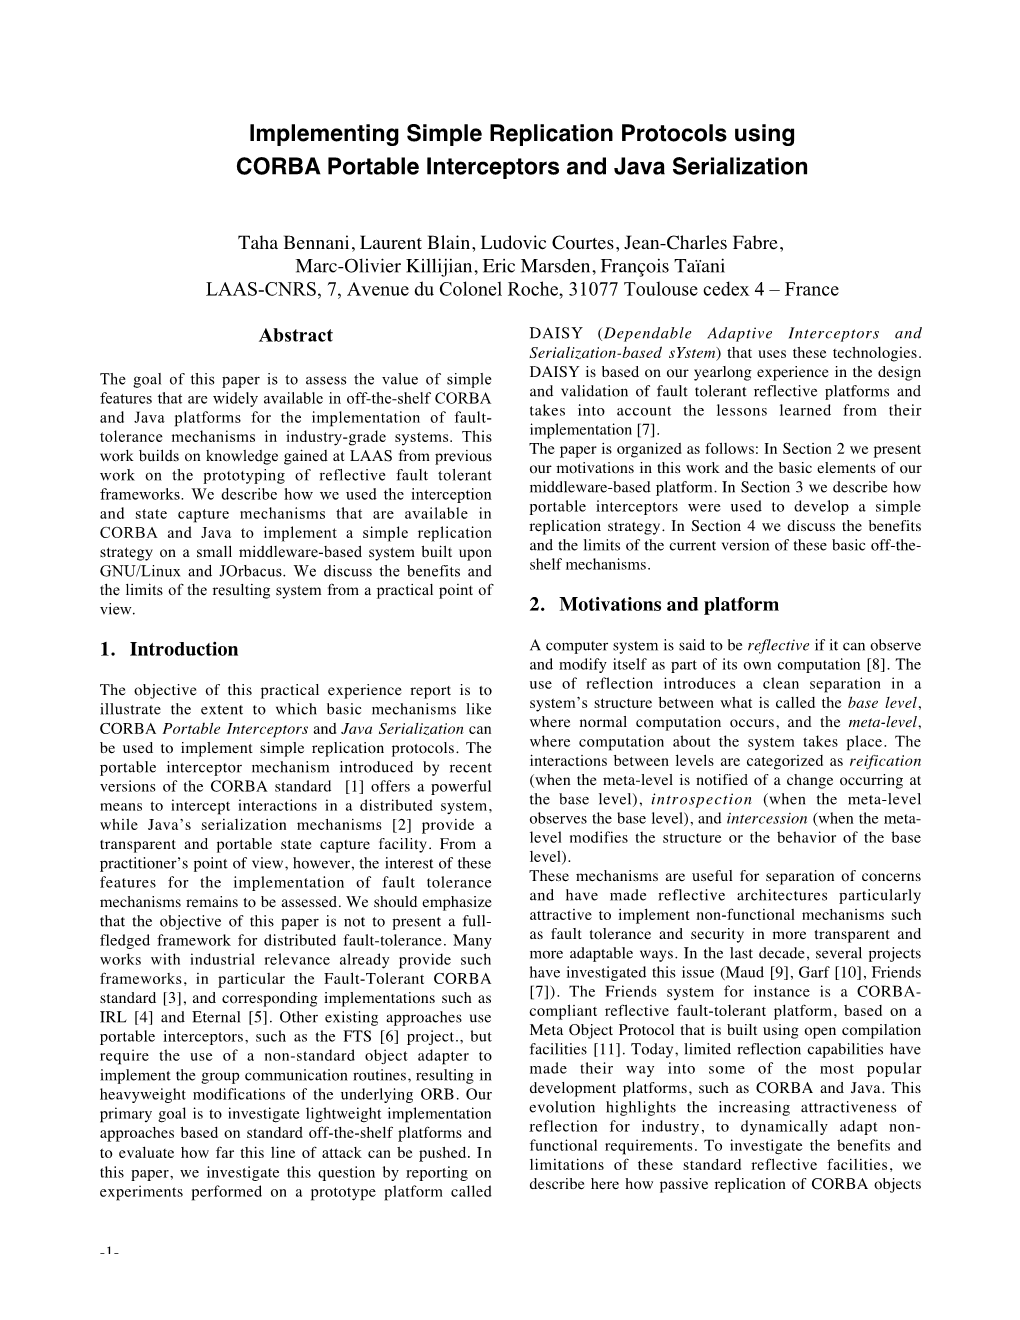 Implementing Simple Replication Protocols Using CORBA Portable Interceptors and Java Serialization